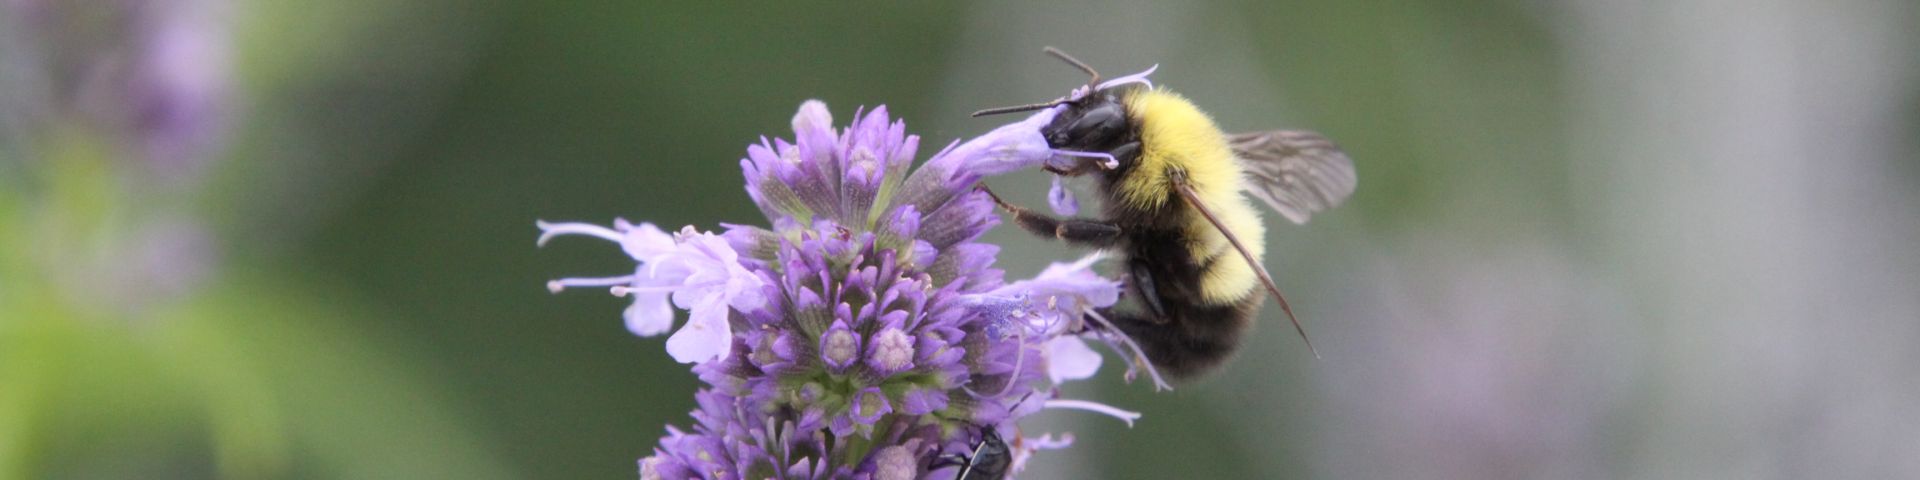 bumble bee on purple flowers